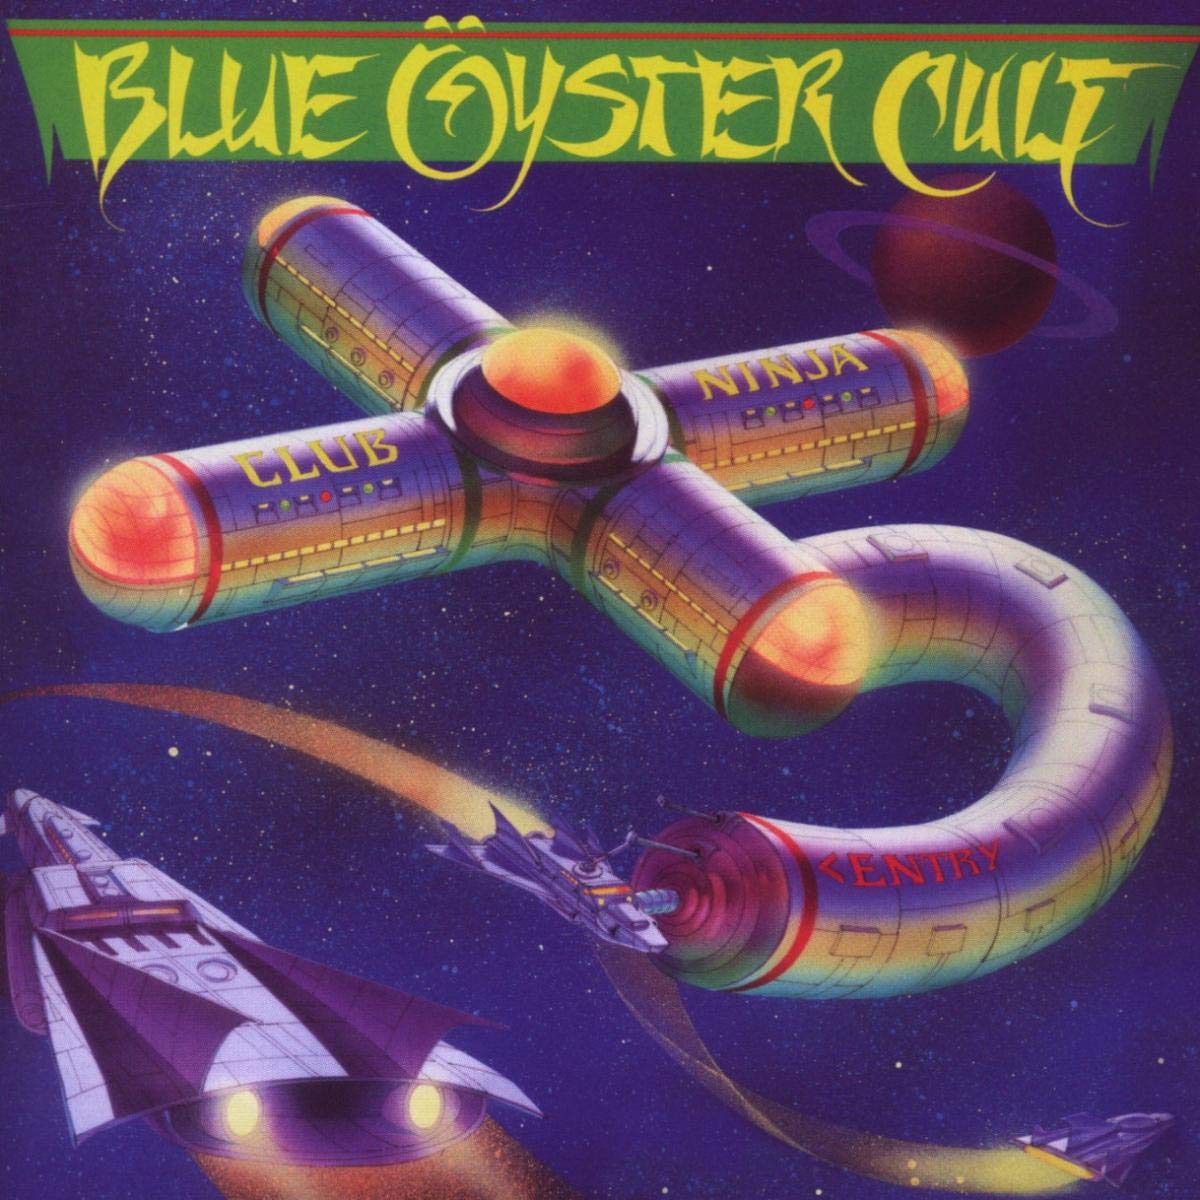 BLUE OYSTER CULT – CLUB NINJA